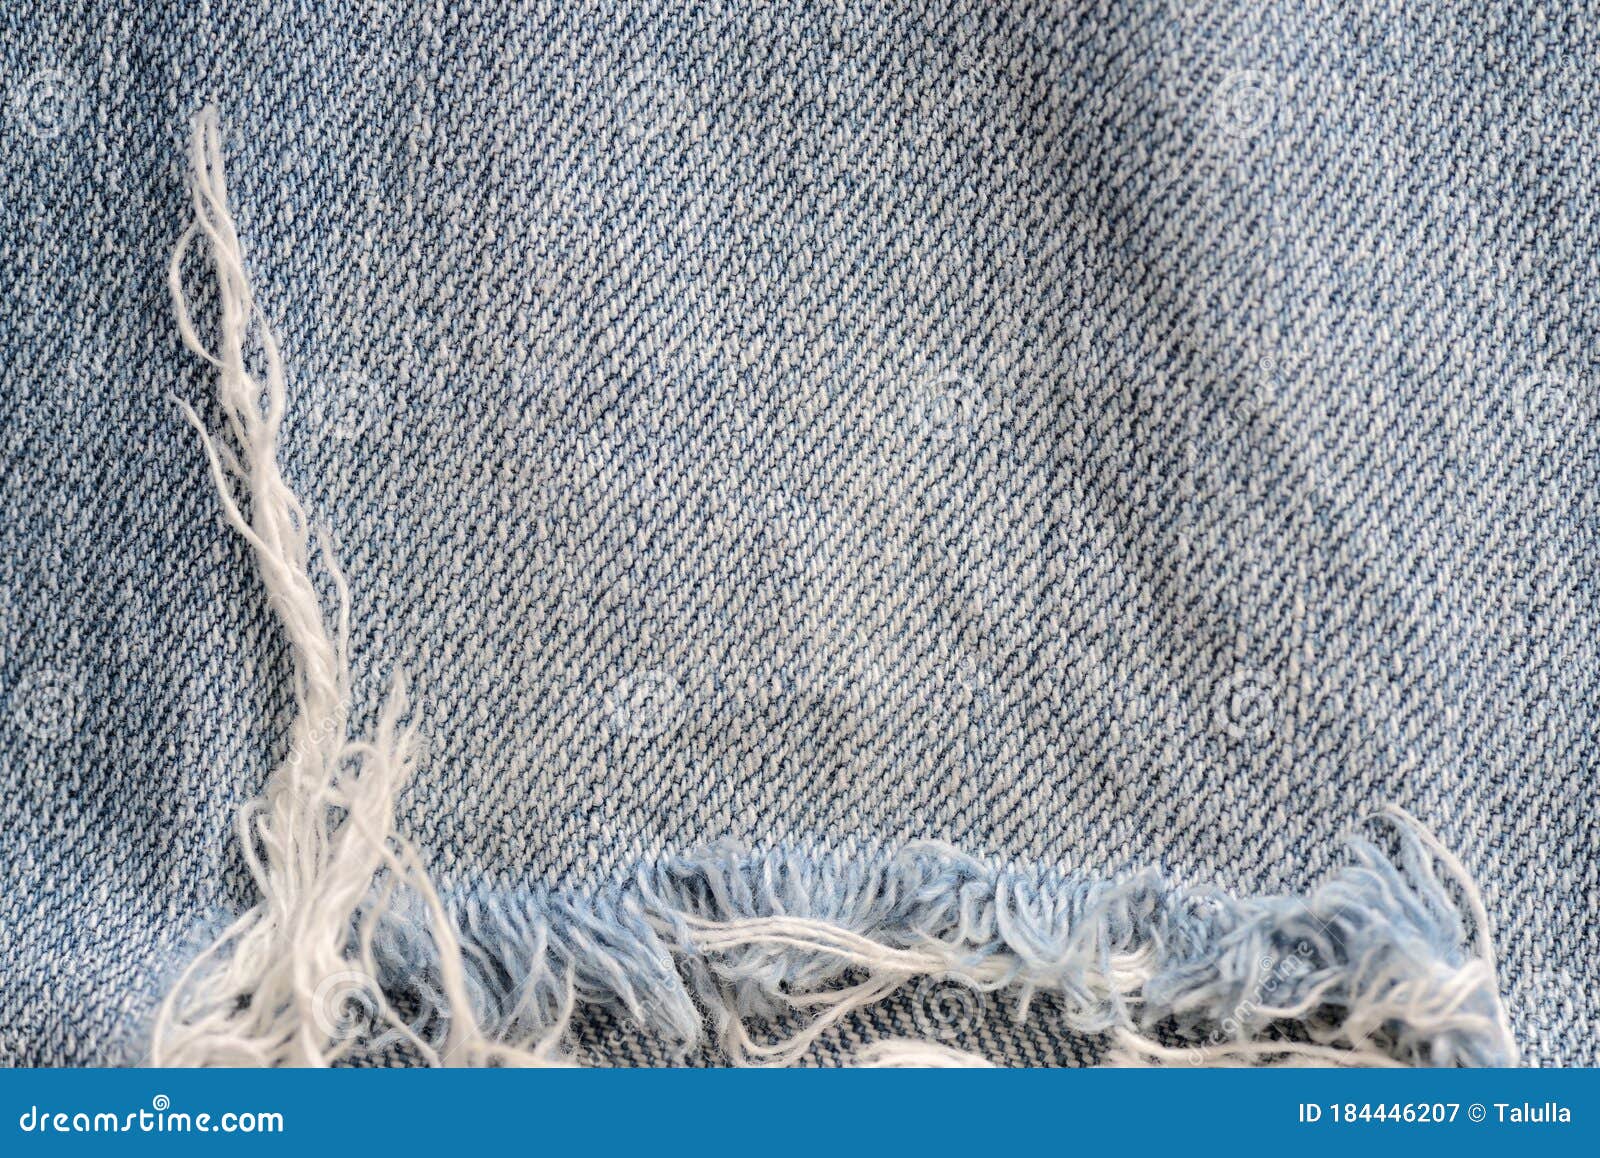 Old Blue Jeans Texture Close-up. Denim Background Stock Image - Image ...